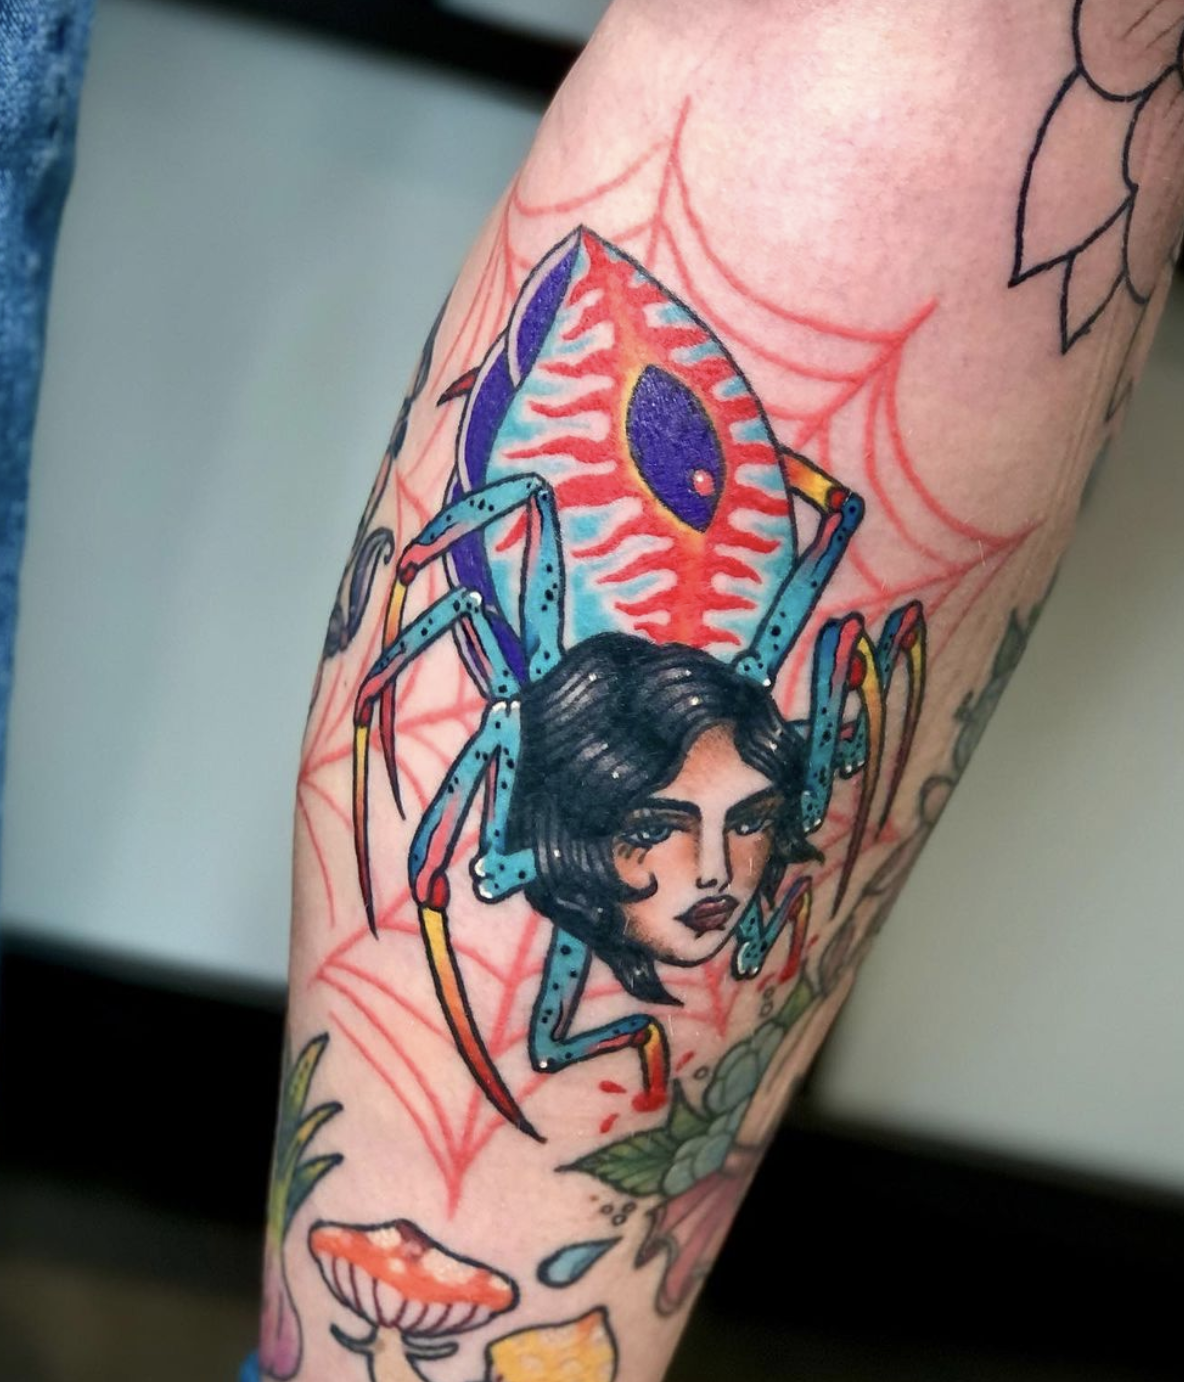 Lady Spider Tattoo by Brendan Rowe at Memoir Tattoo